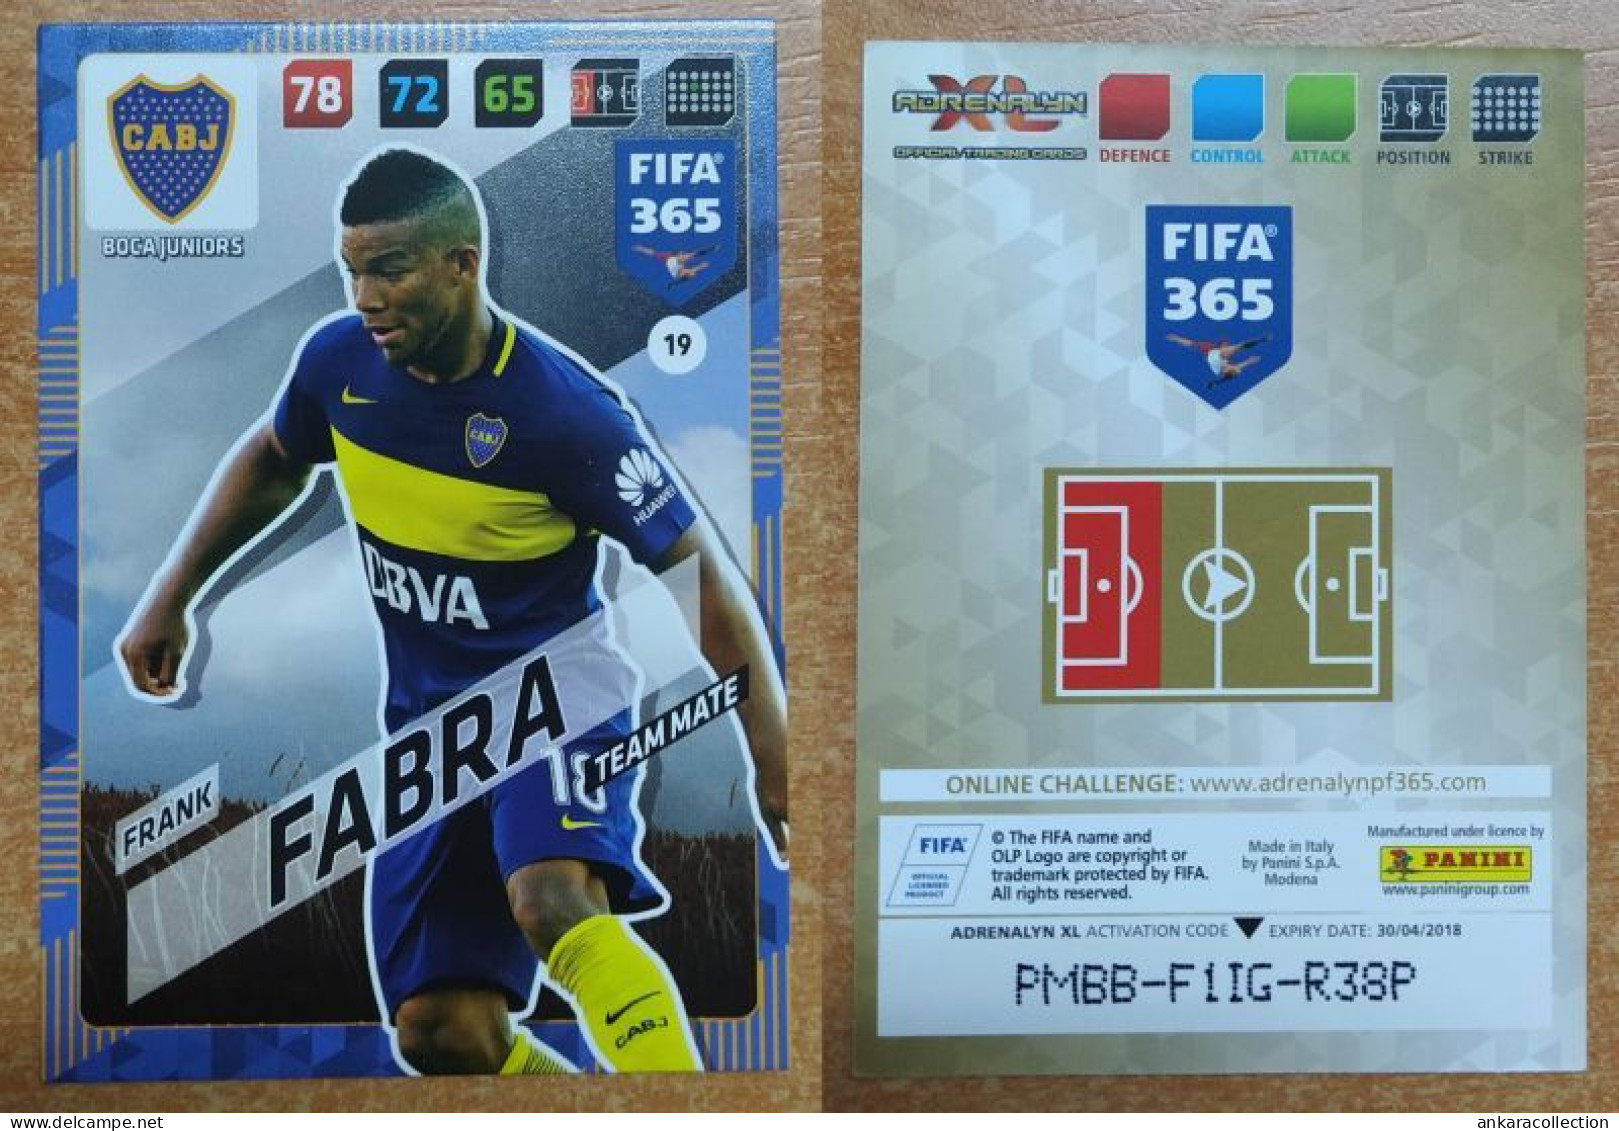 AC - 19 FRANK FABRA  BOCA JUNIORS  TEAM MATE  PANINI FIFA 365 2018 ADRENALYN TRADING CARD - Trading Cards